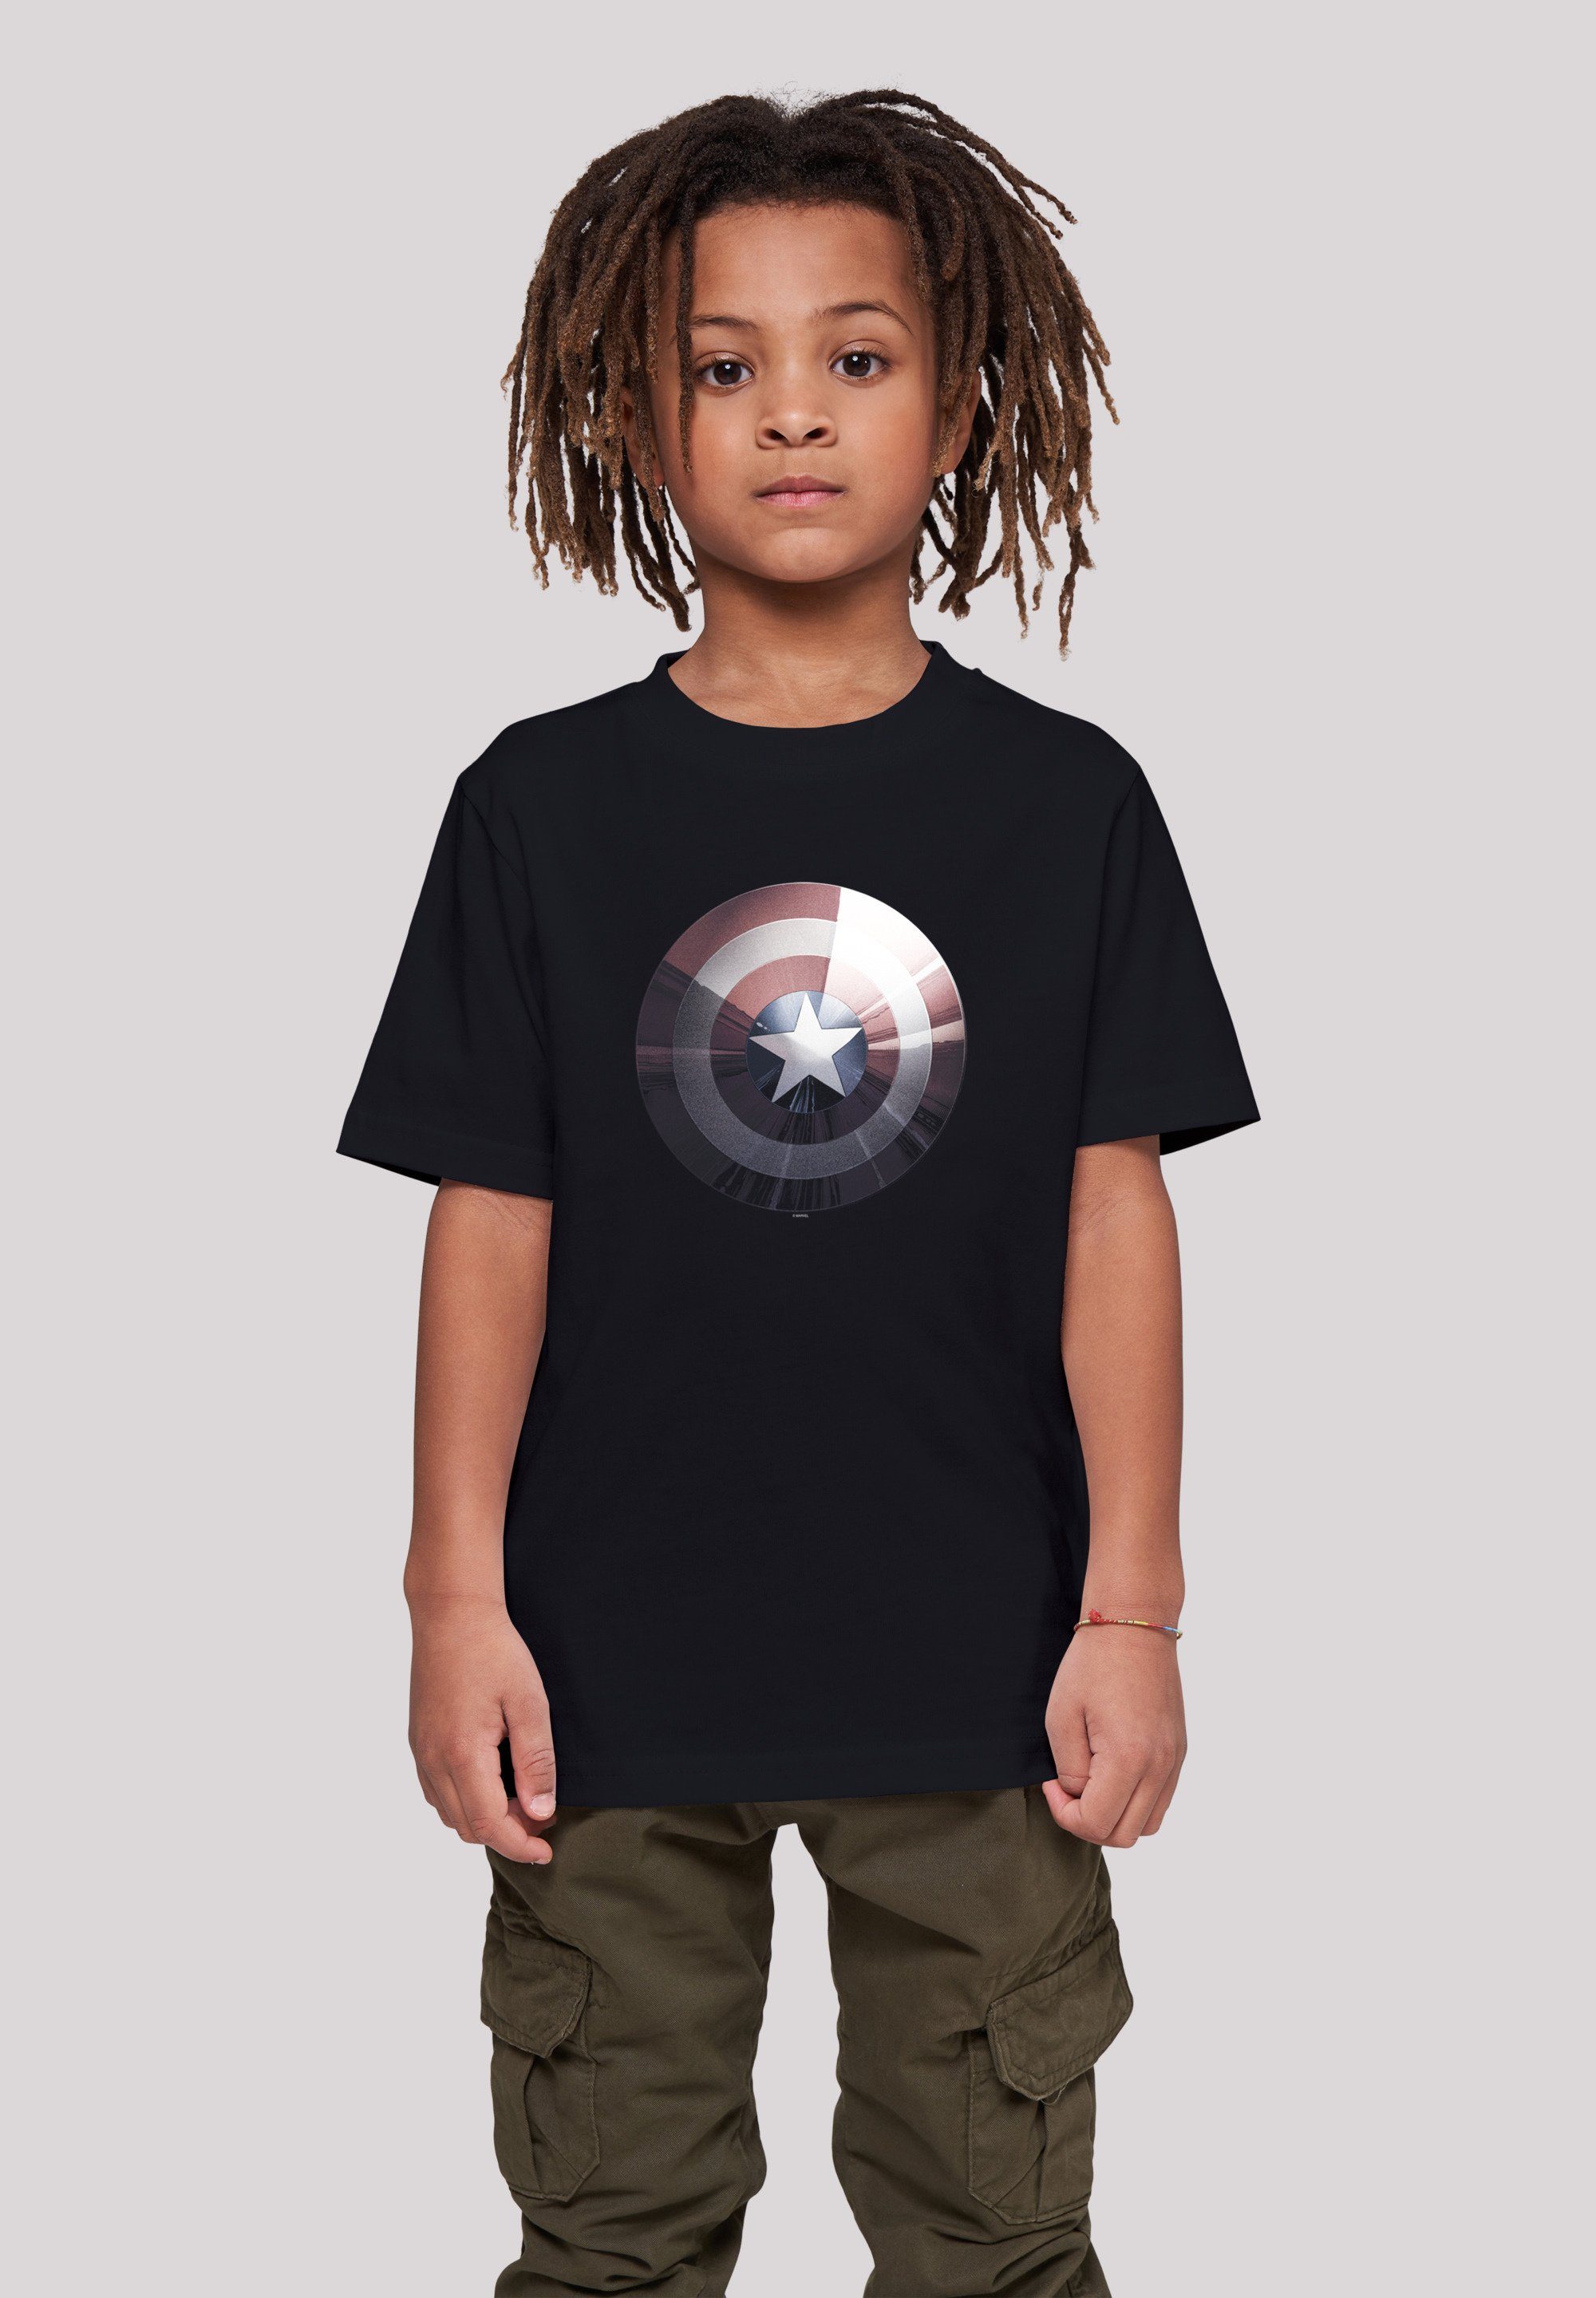 Print 'Marvel America Merch,Jungen,Mädchen,Logo Kinder,Premium T-Shirt T-Shirt Captain Shiny' F4NT4STIC Shield Unisex